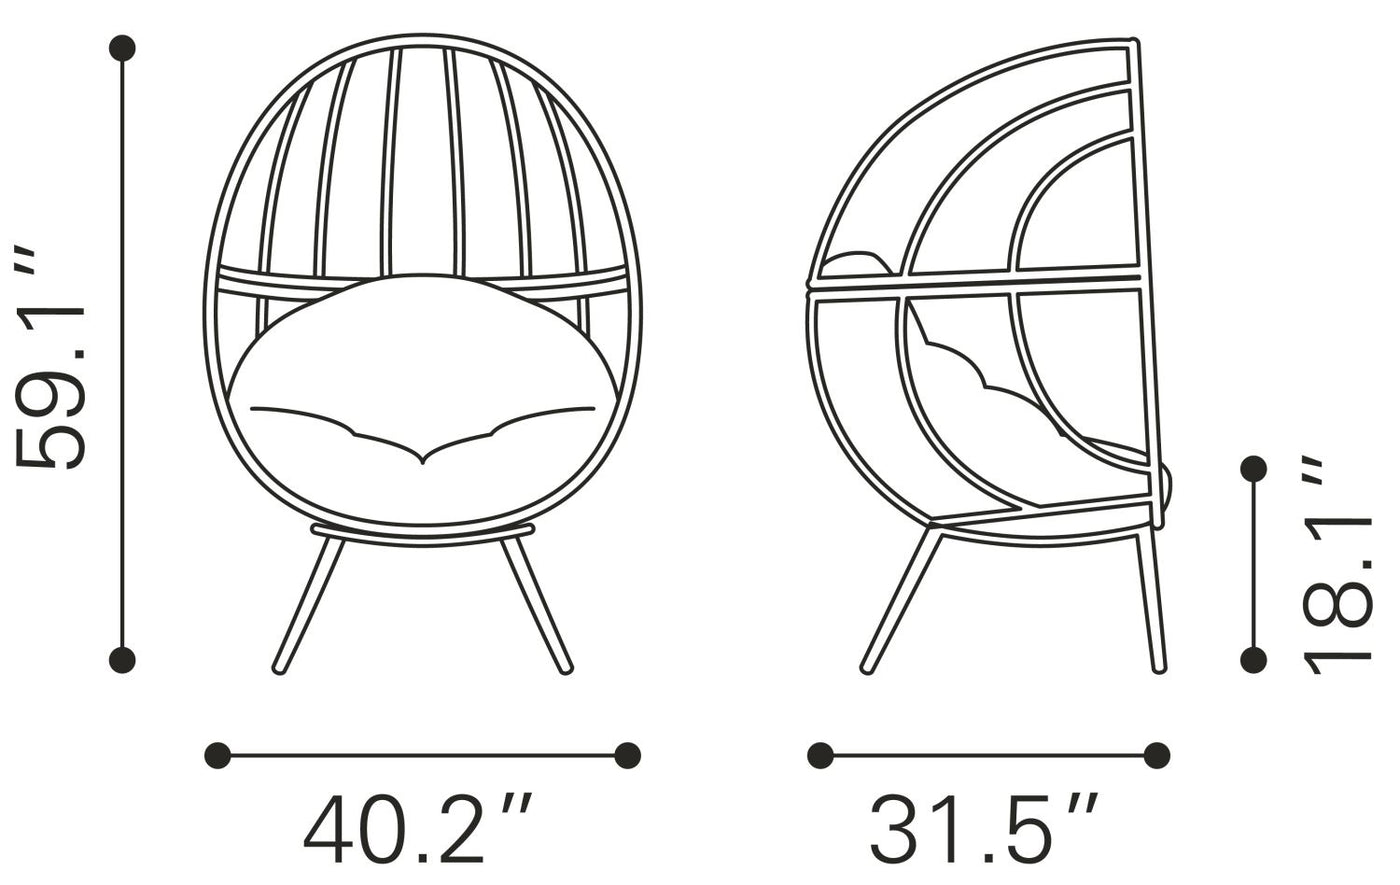 Petta Outdoor Egg Chair - Natural/Grey